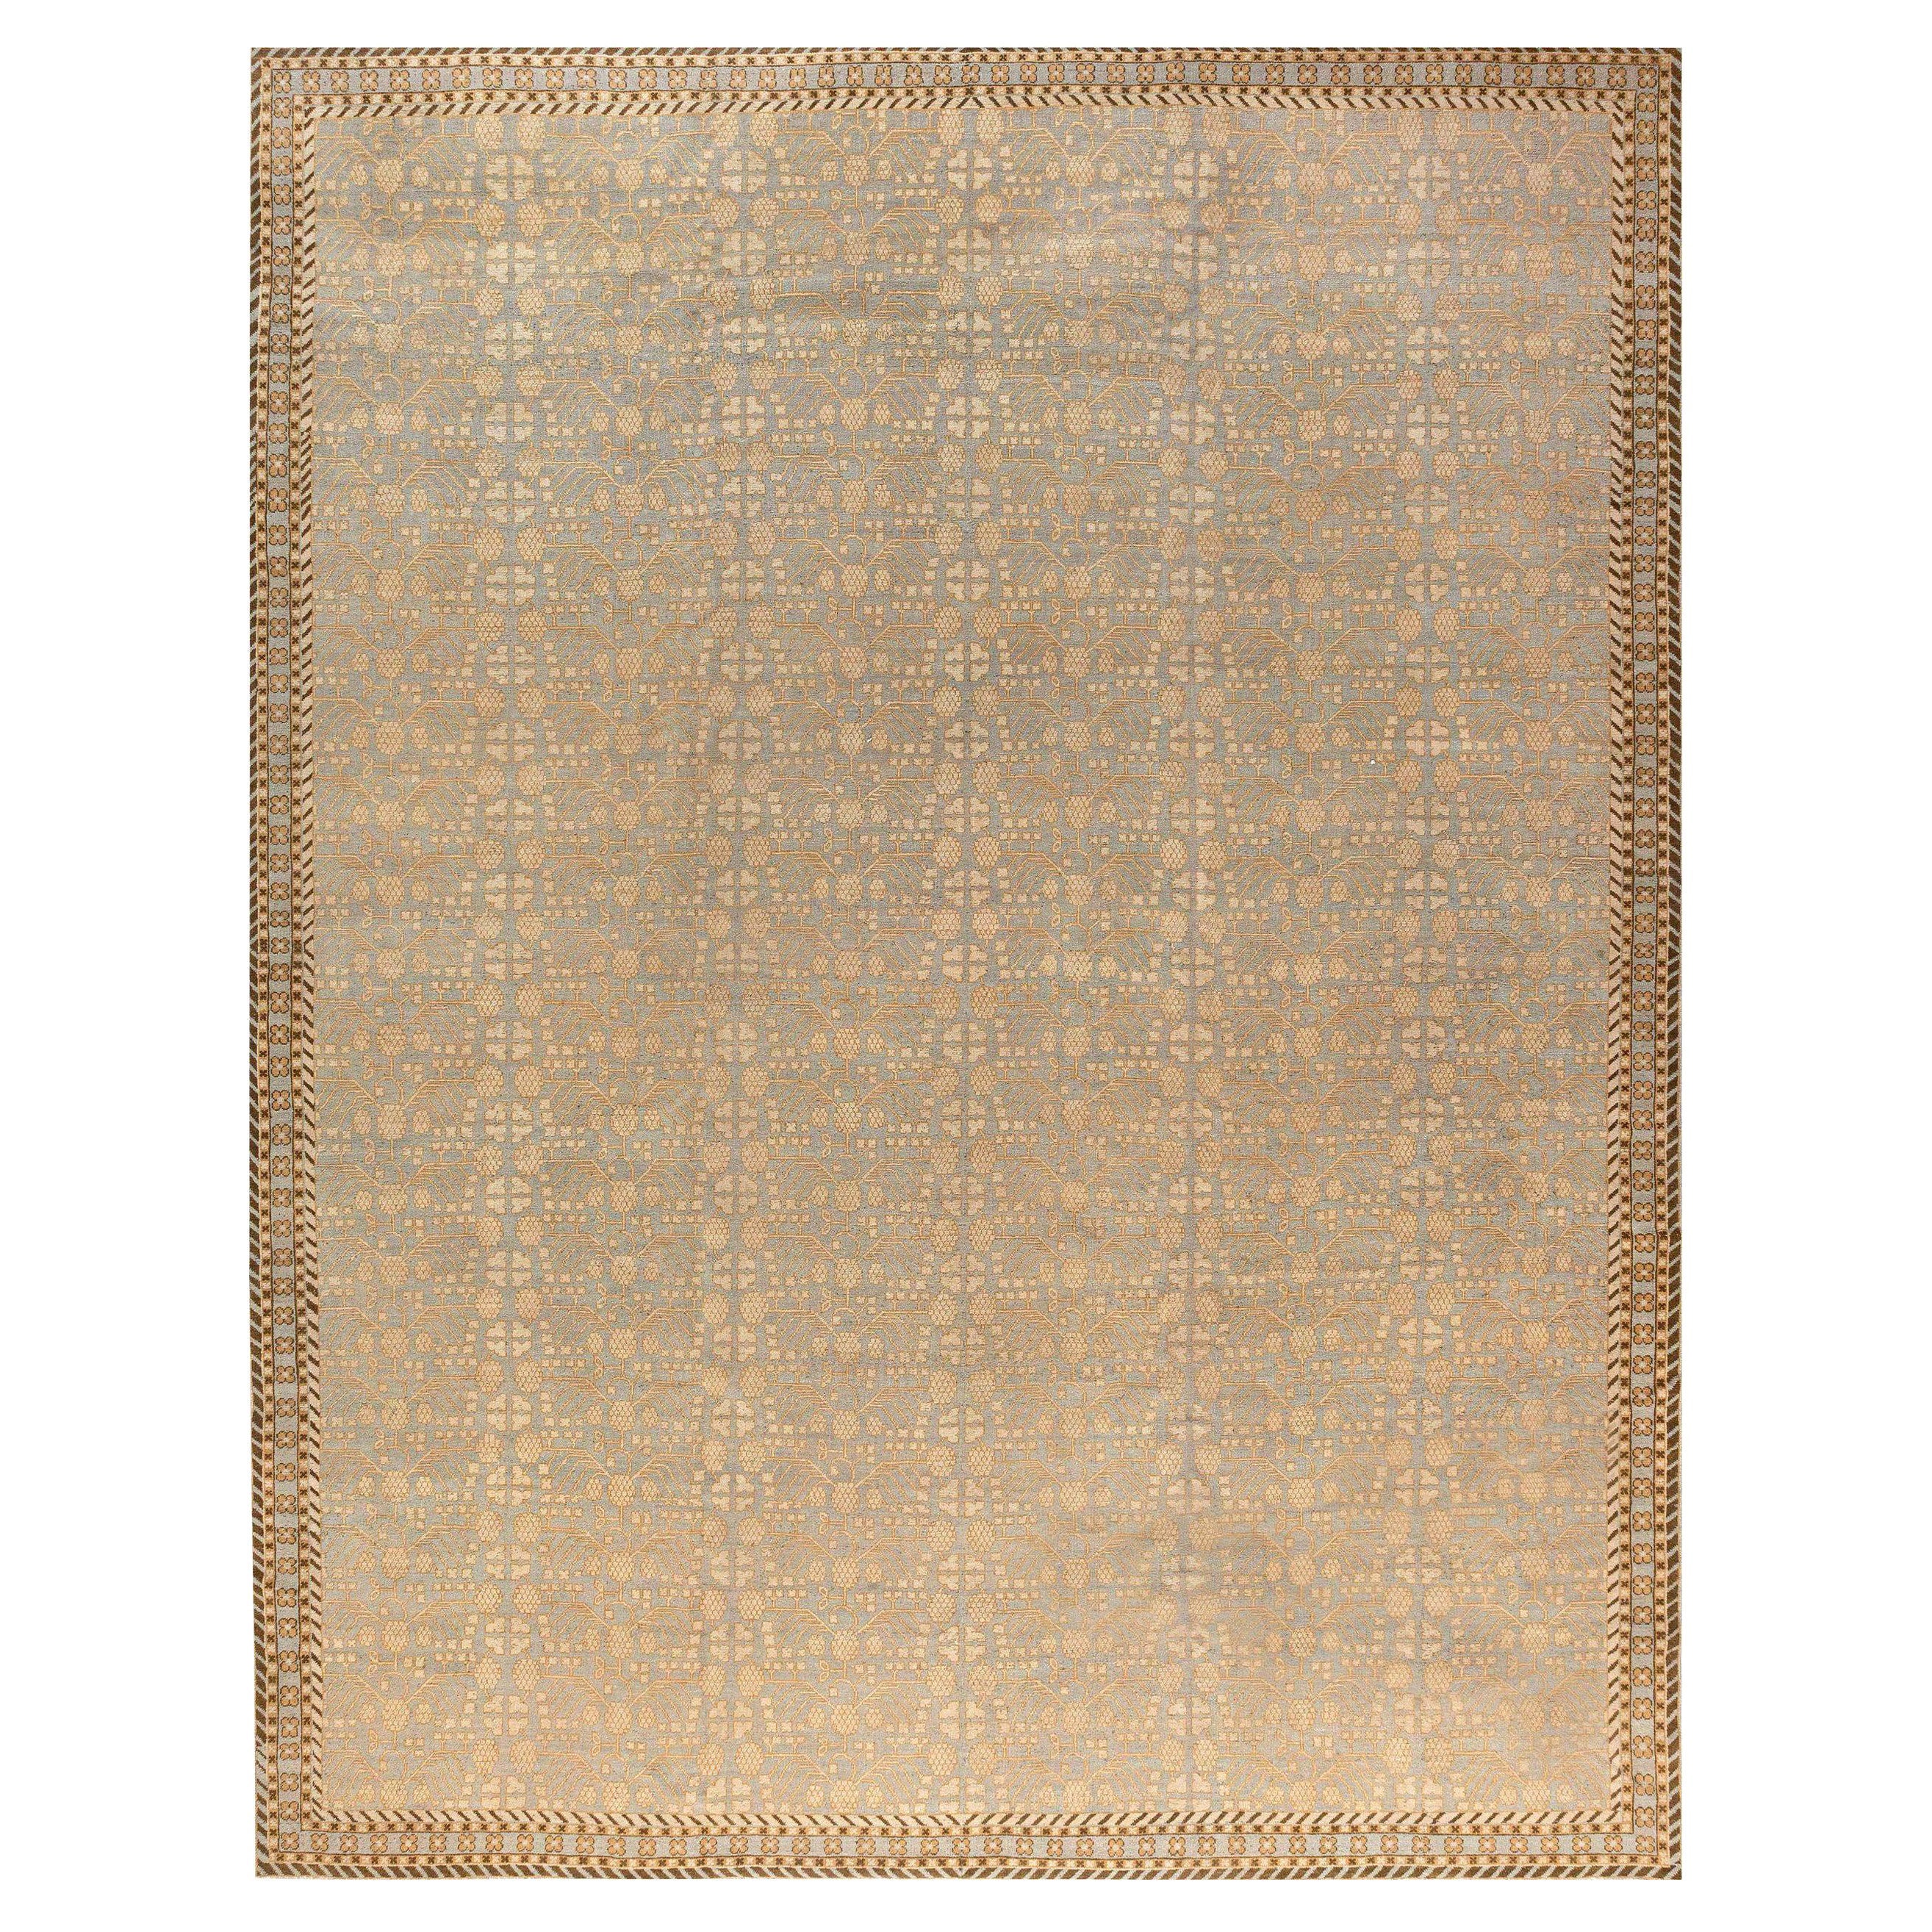 Contemporary Samarkand Traditional Design Handmade Wool Rug by Doris Leslie Blau